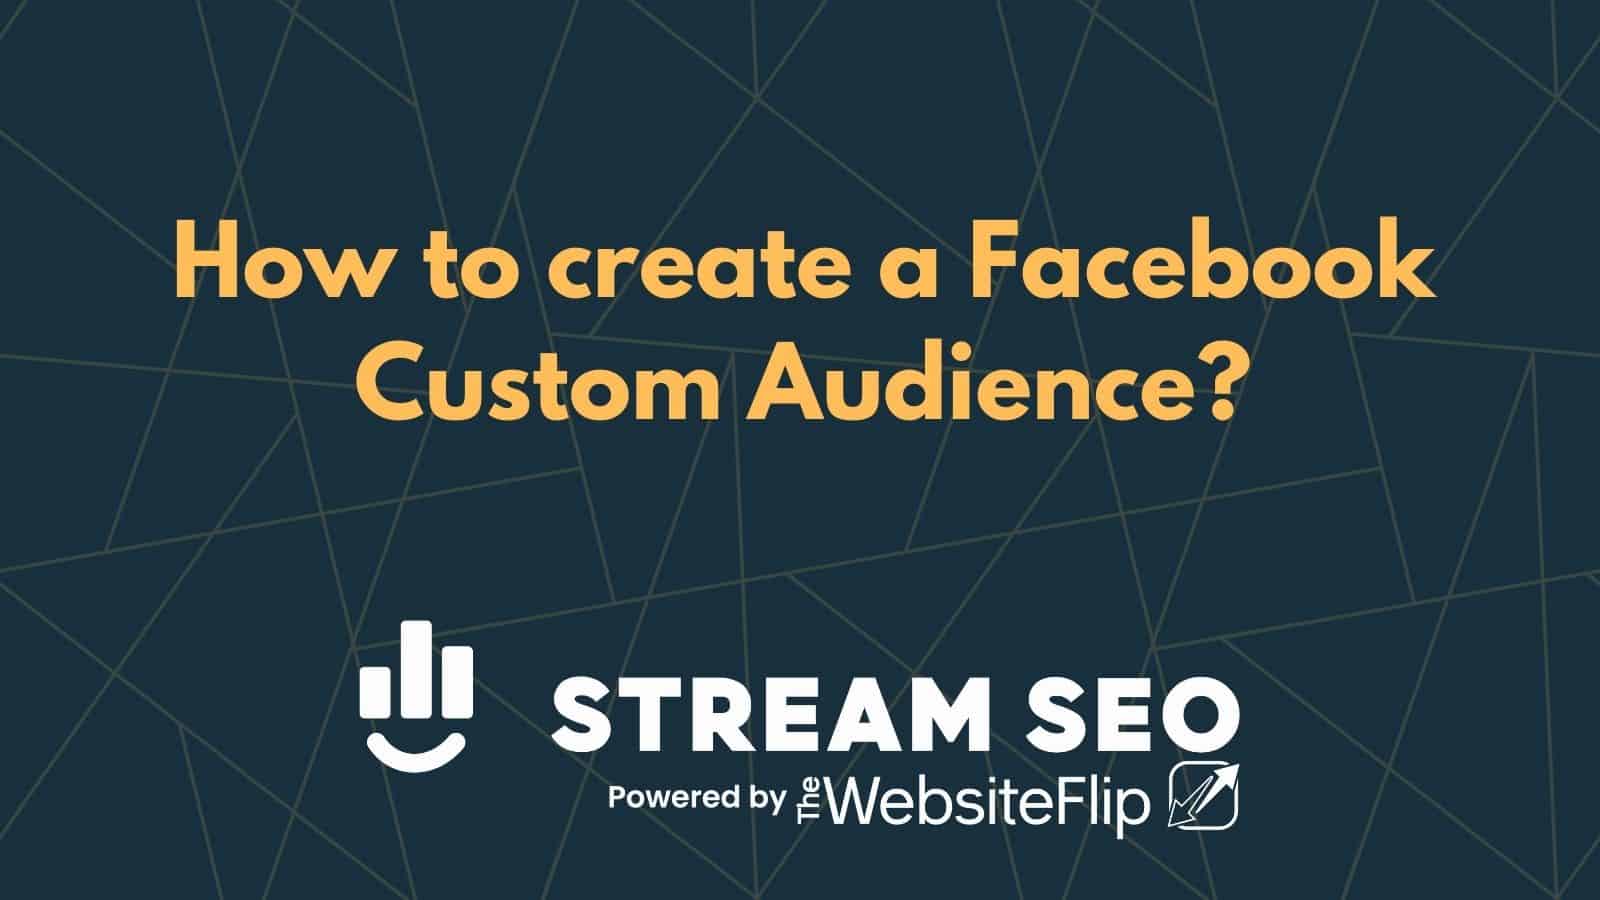 How to create a Facebook Custom Audience?